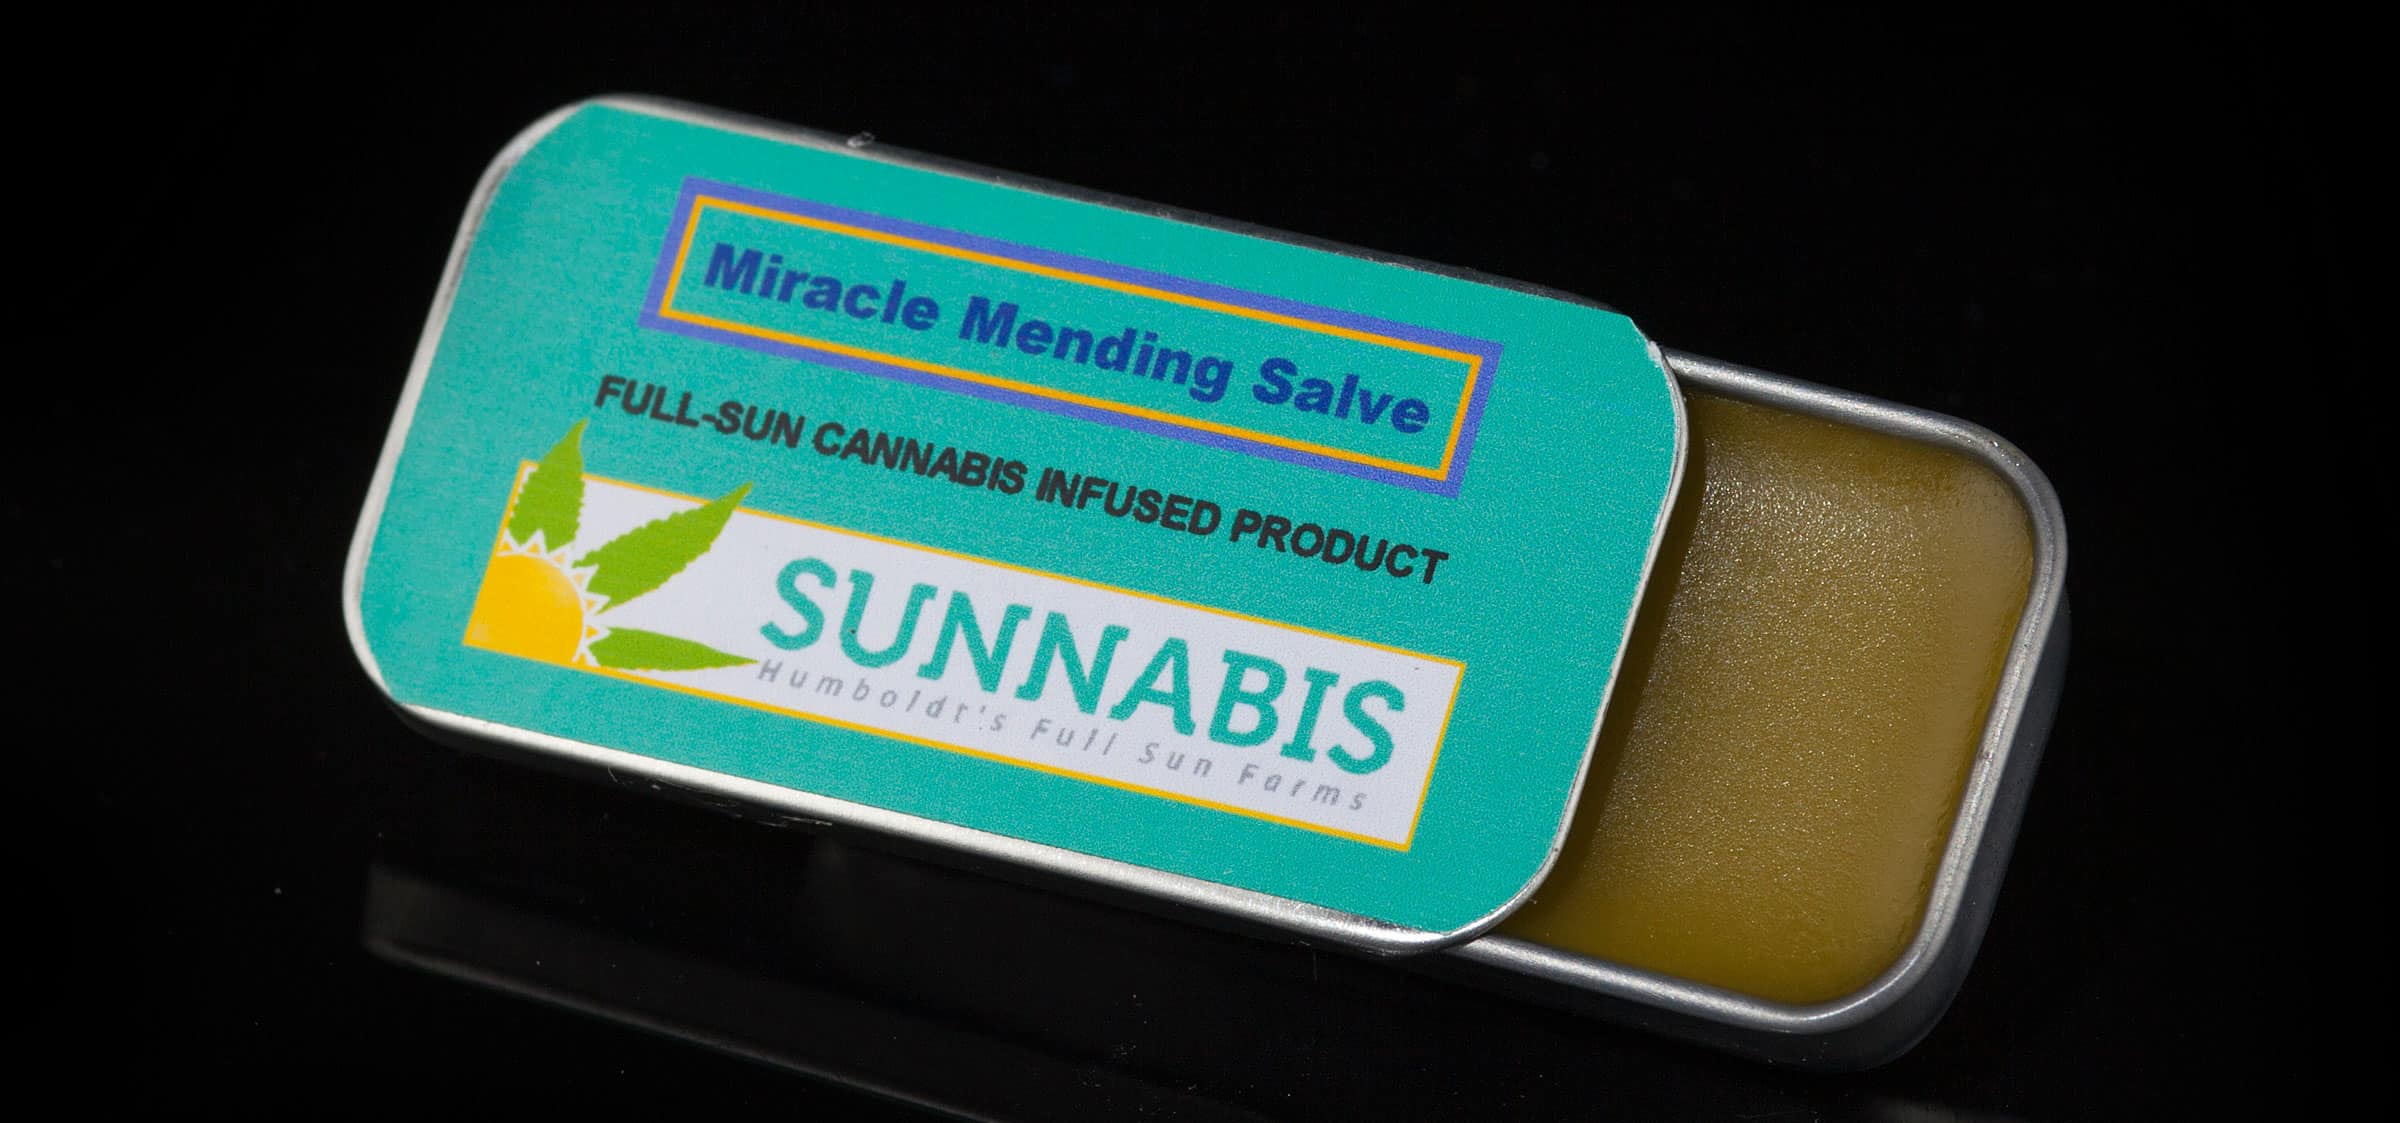 t14_miracle_mending_skin_salve_sunnabis